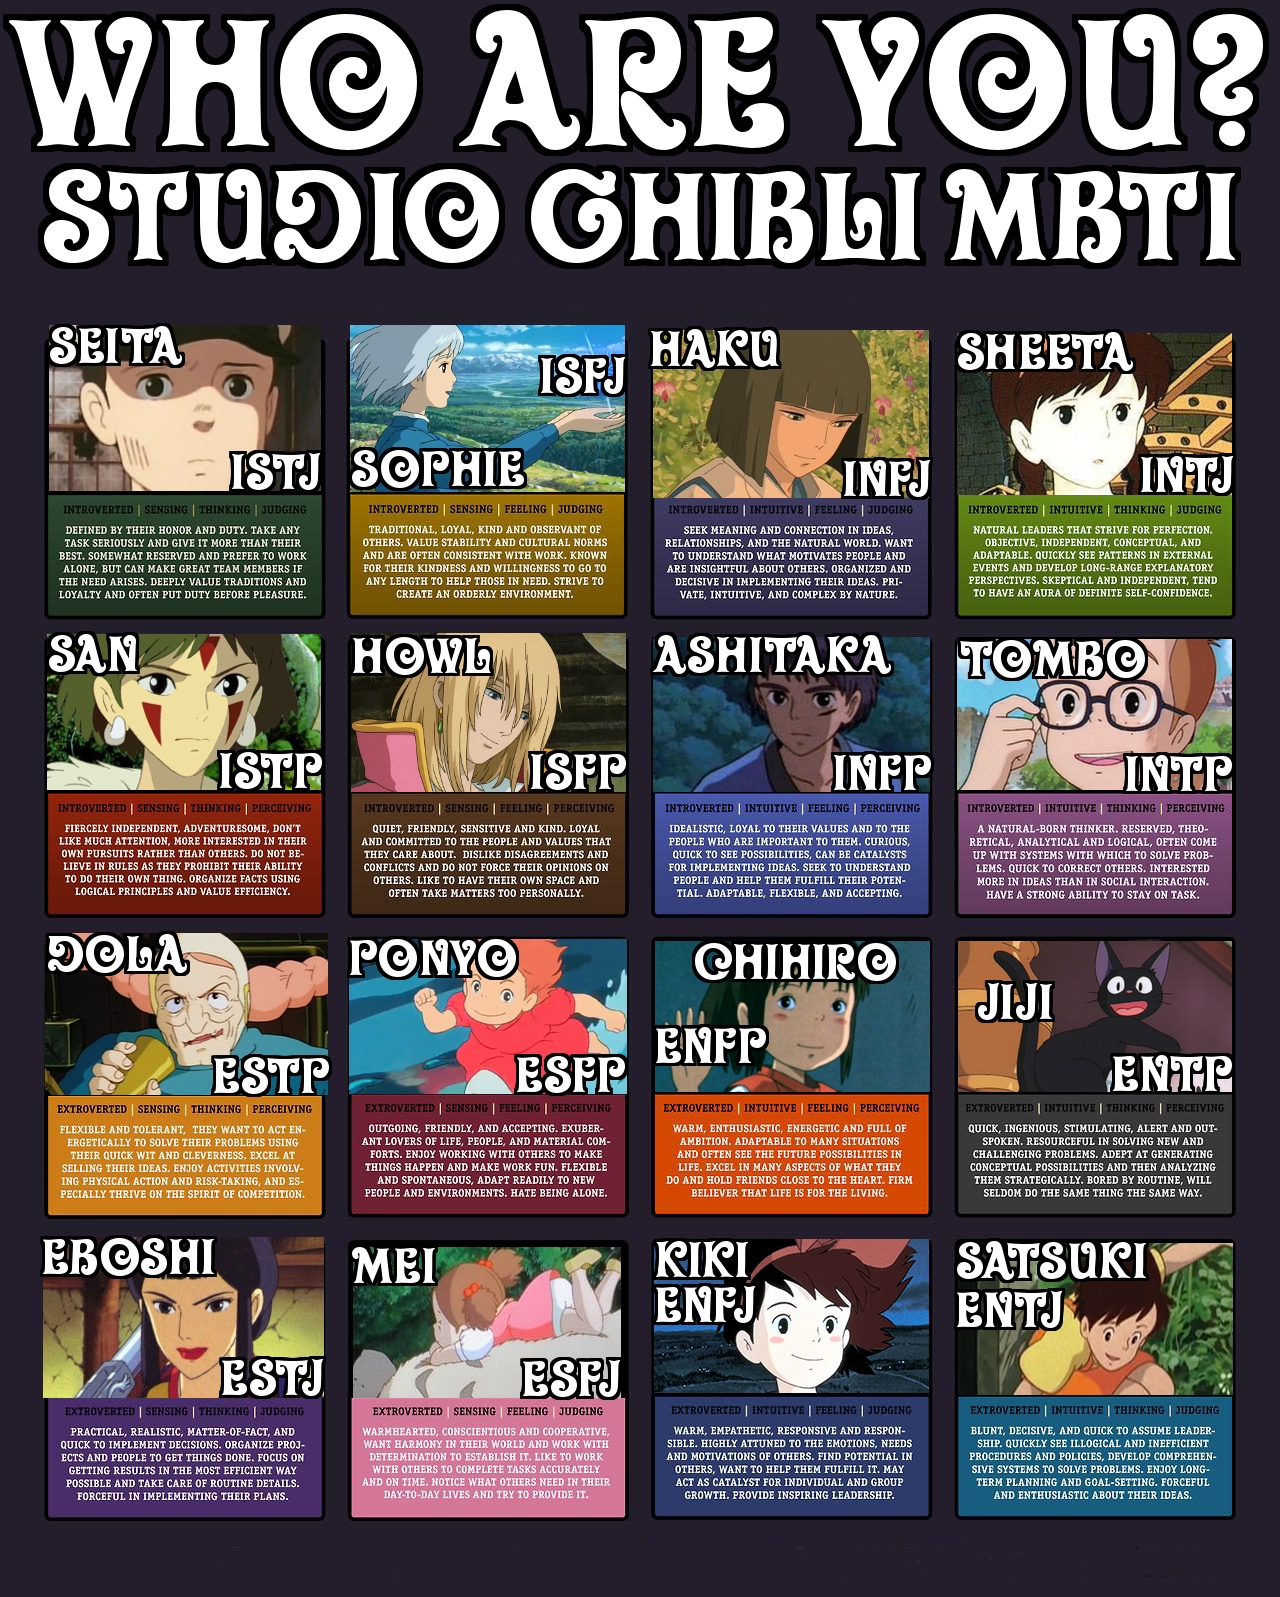 Anime Myers Briggs Personality Test by animemusicFCB on DeviantArt